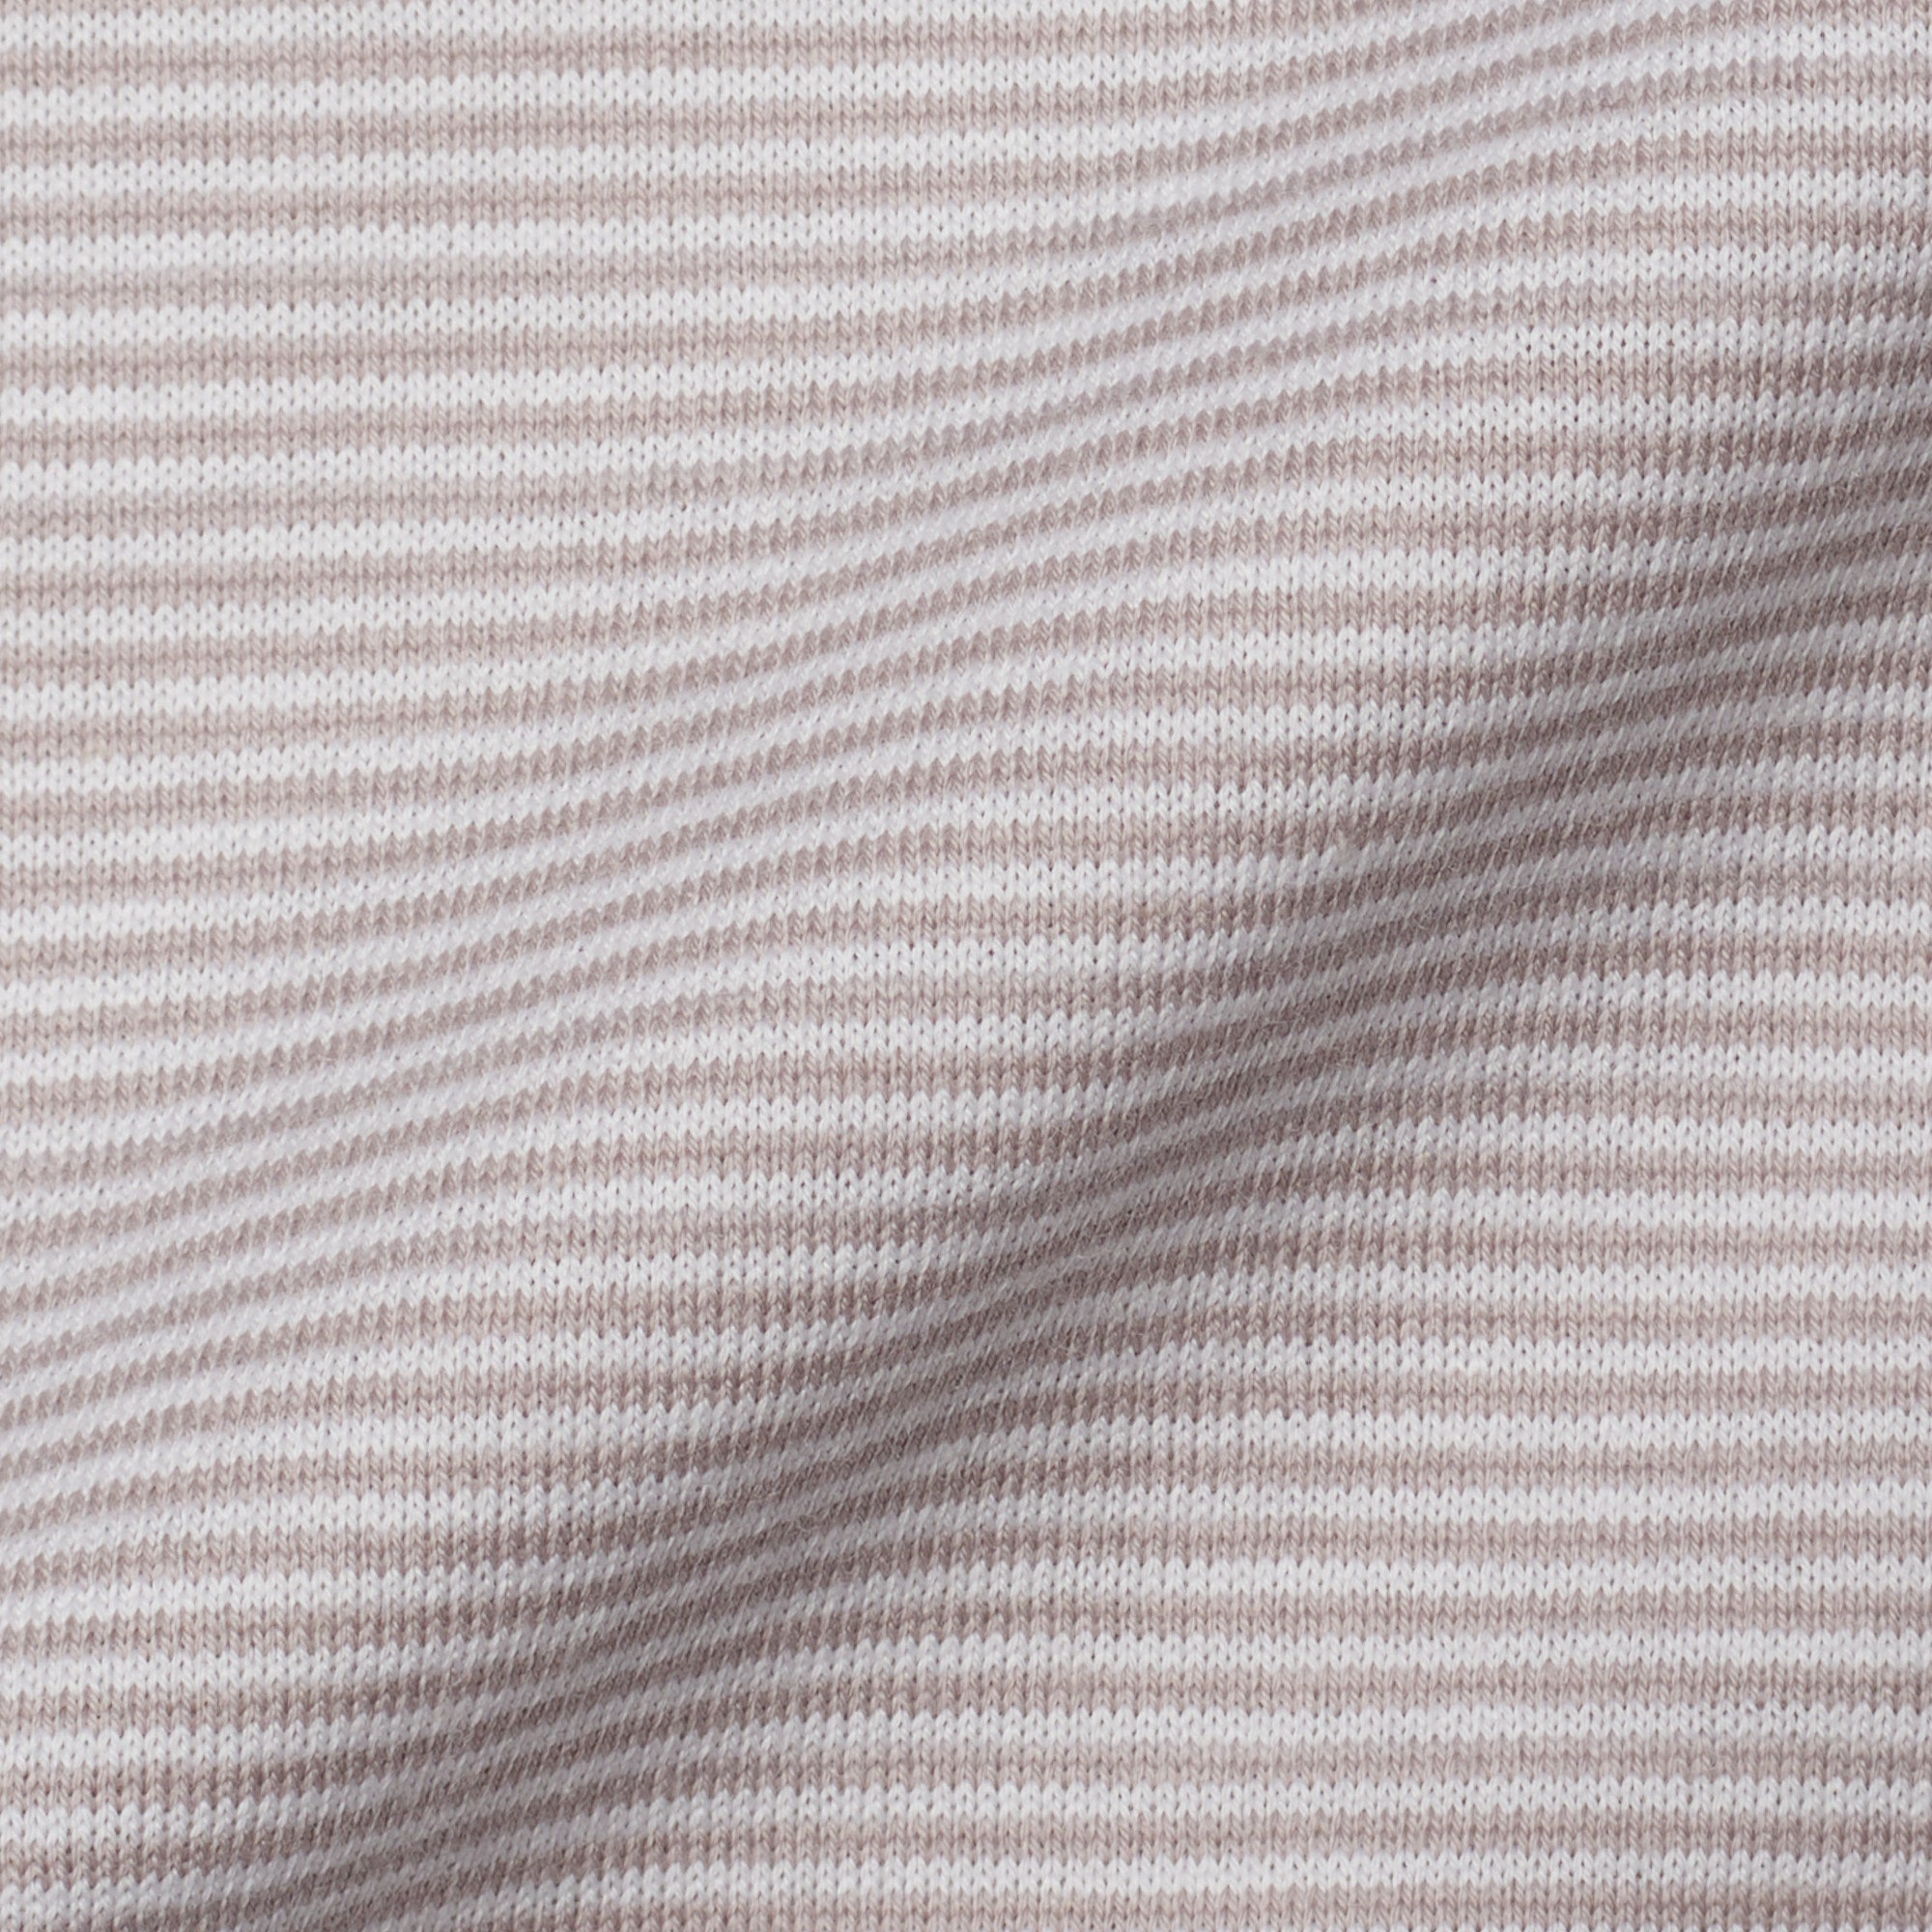 FEDELI "Libeccio" Light Gray Striped Cotton Jersey Polo Shirt EU 54 NEW US XL FEDELI